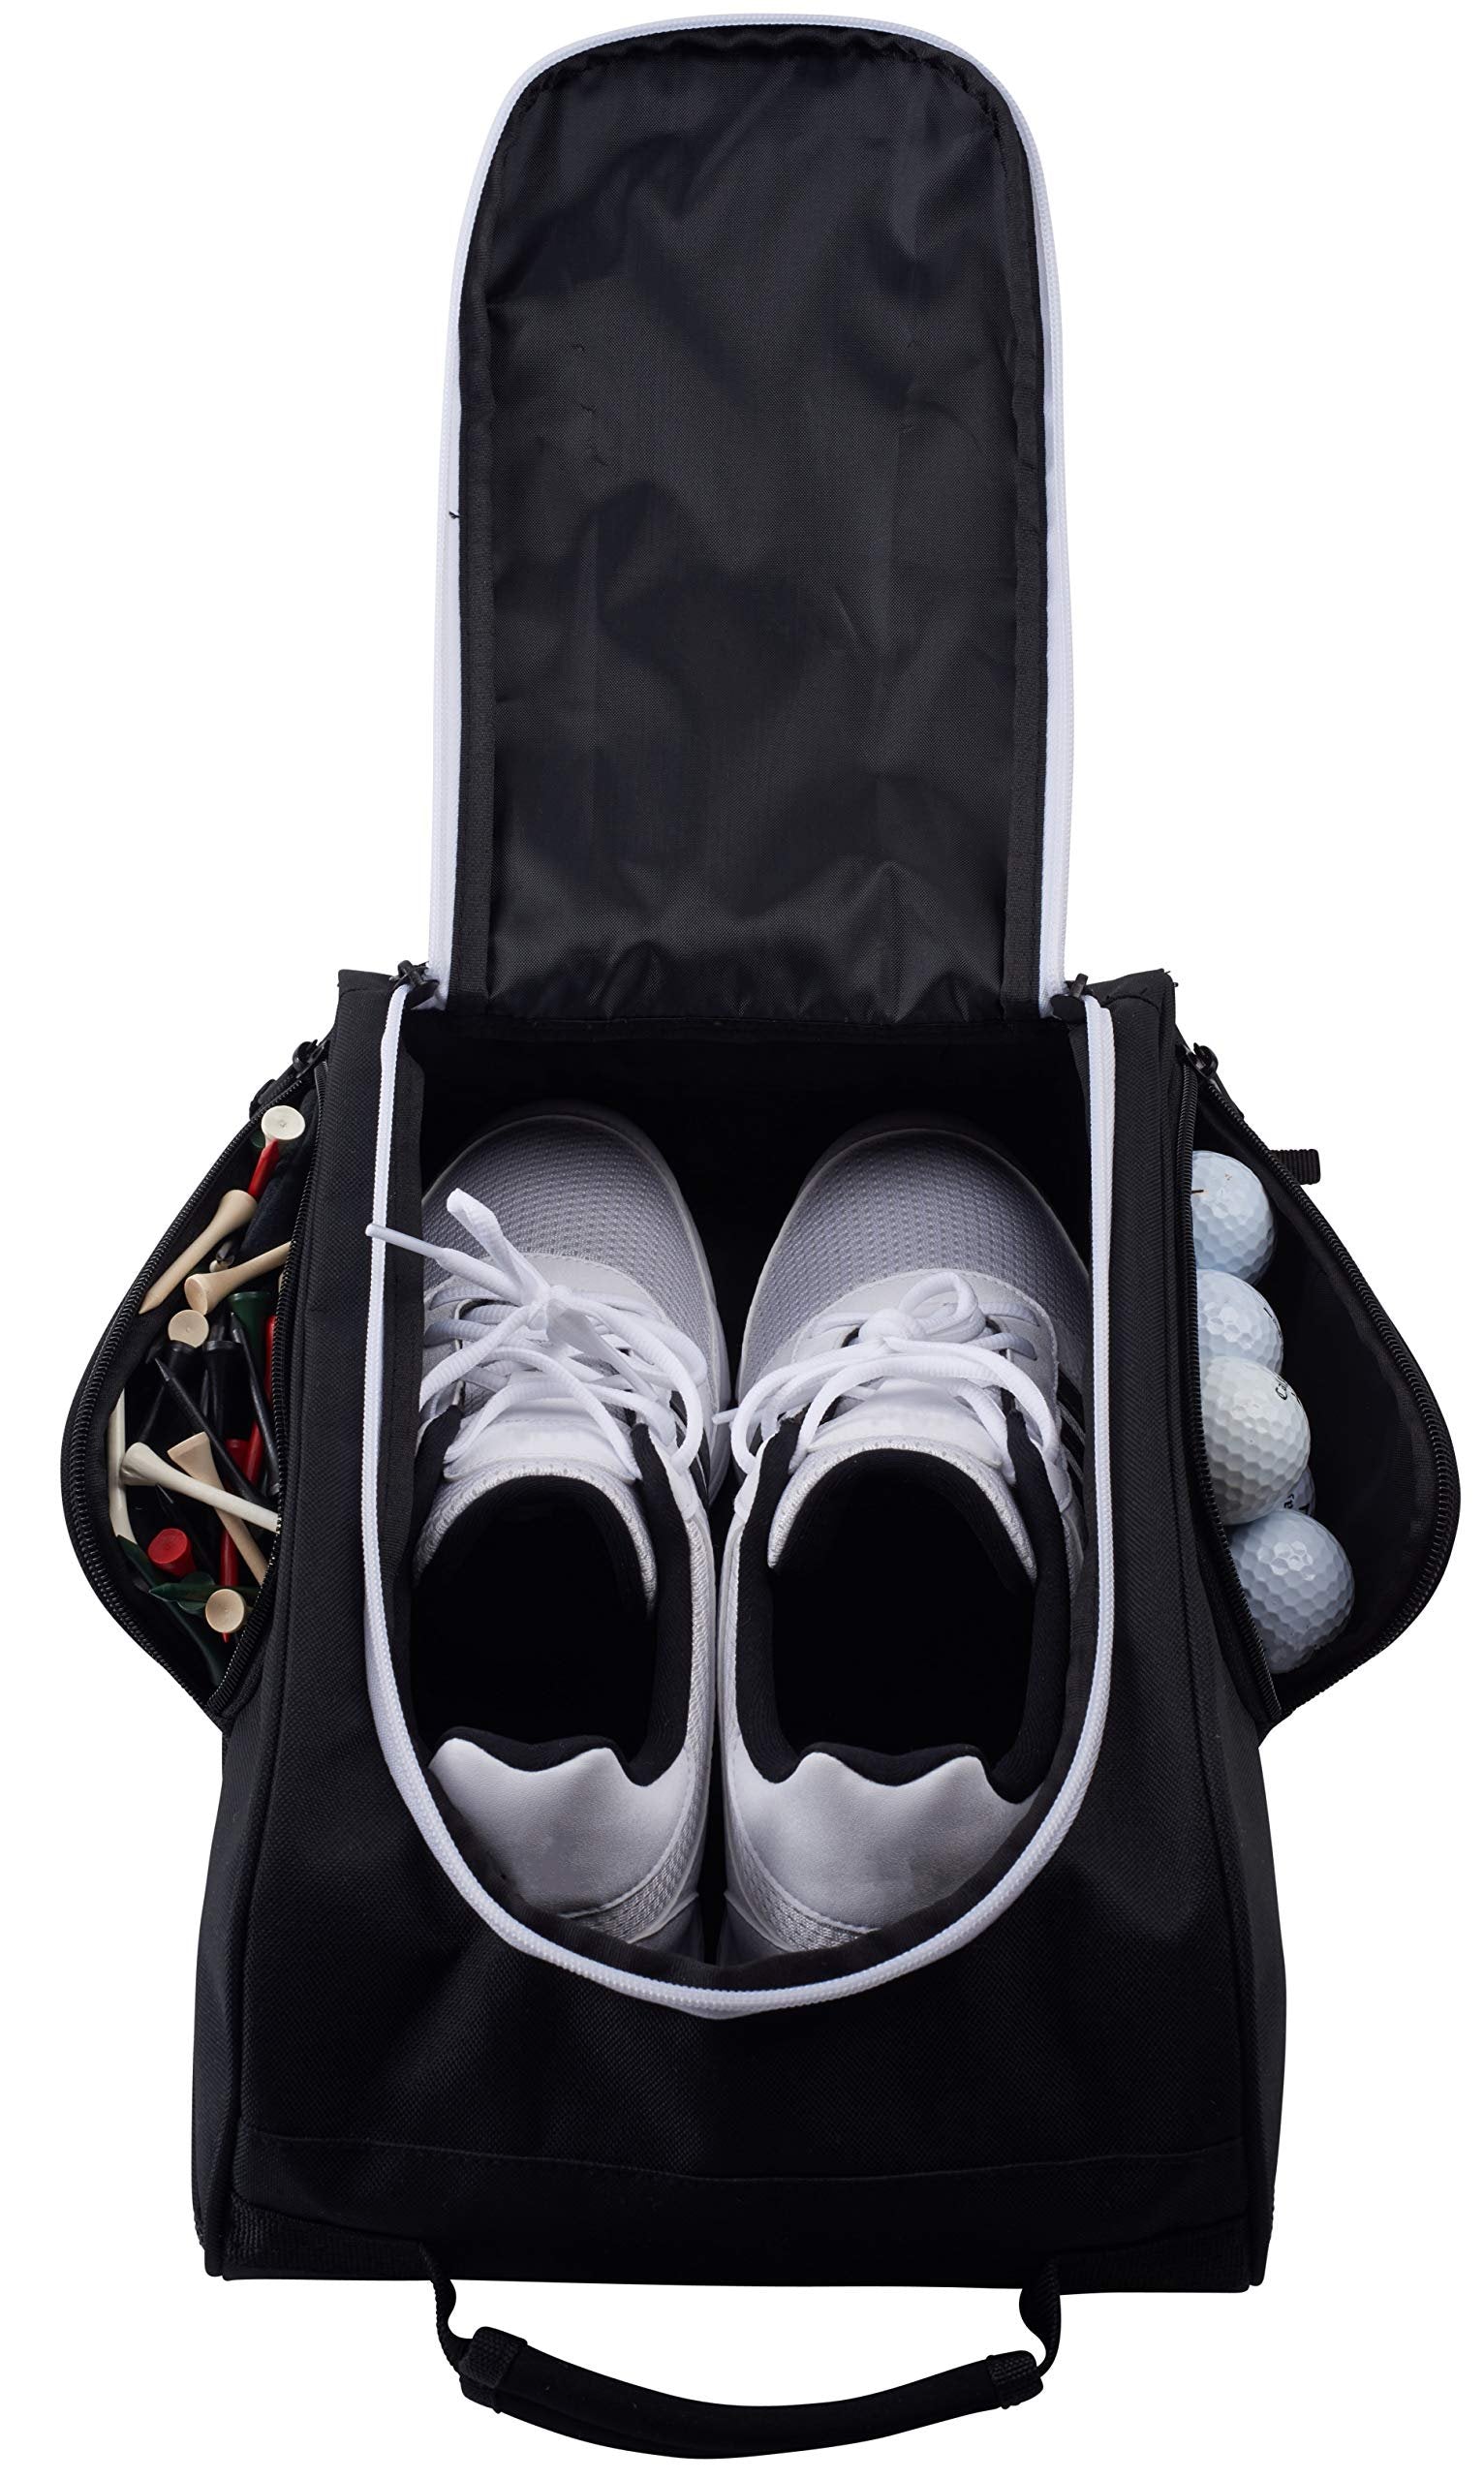 Athletico Golf Shoe Bag - Zippered Shoe Carrier Bags With Ventilation & Outside Pocket for Socks, Tees, etc. (Black/Pink)